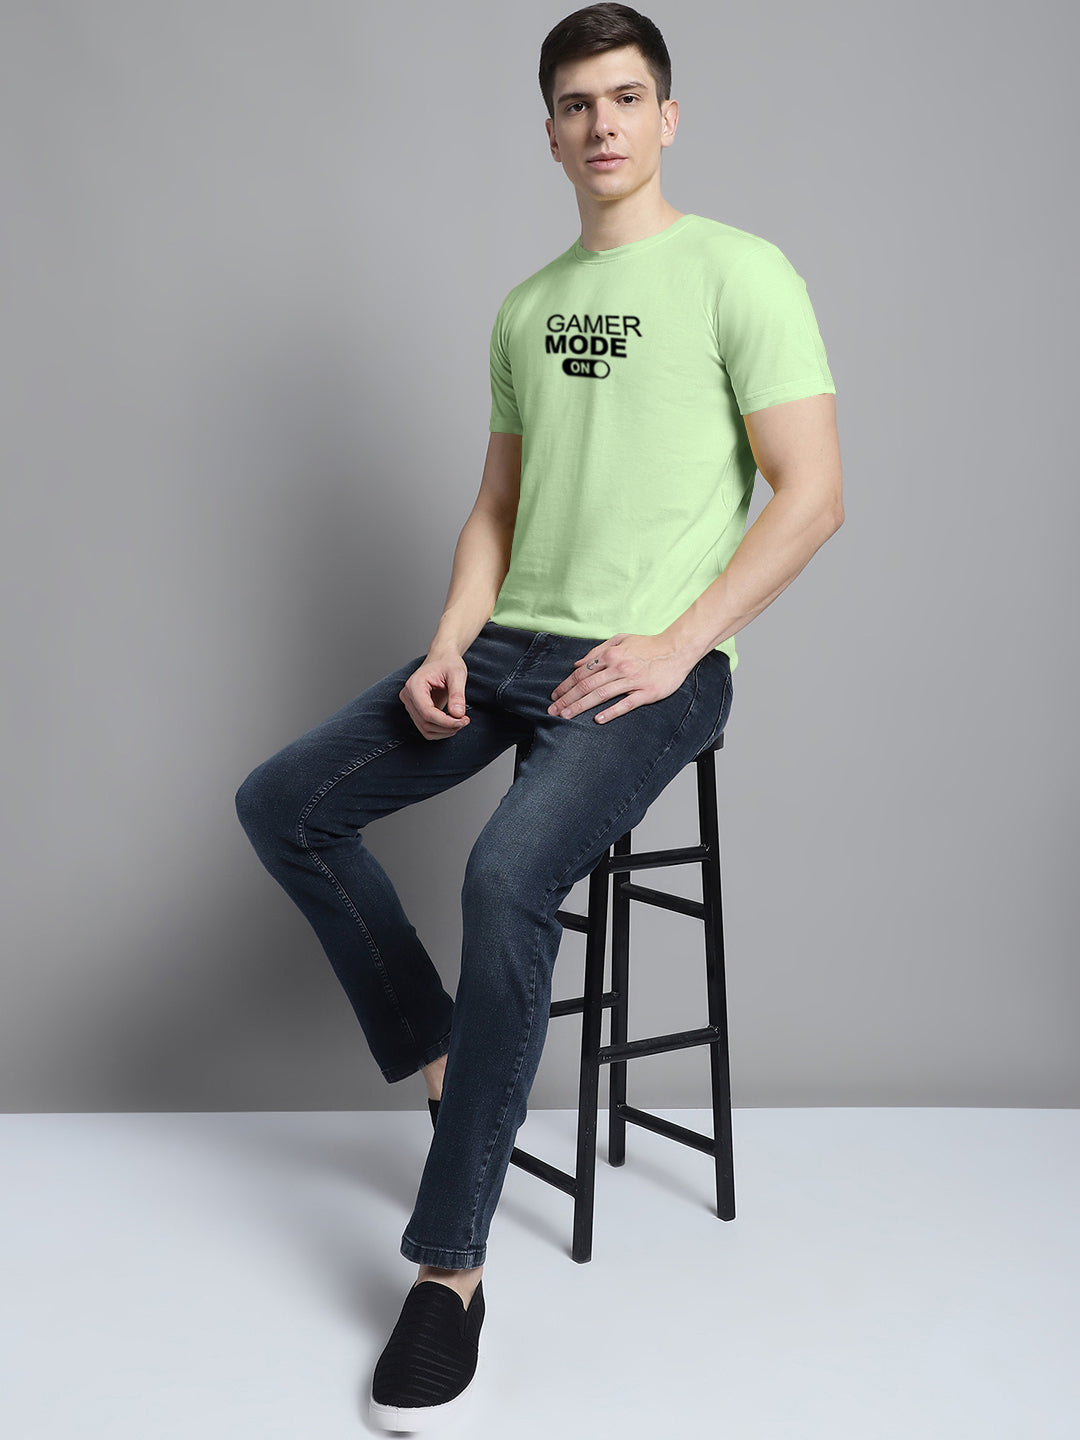 Fbar Gamer Mode On Cotton Round Neck T-Shirt - Friskers